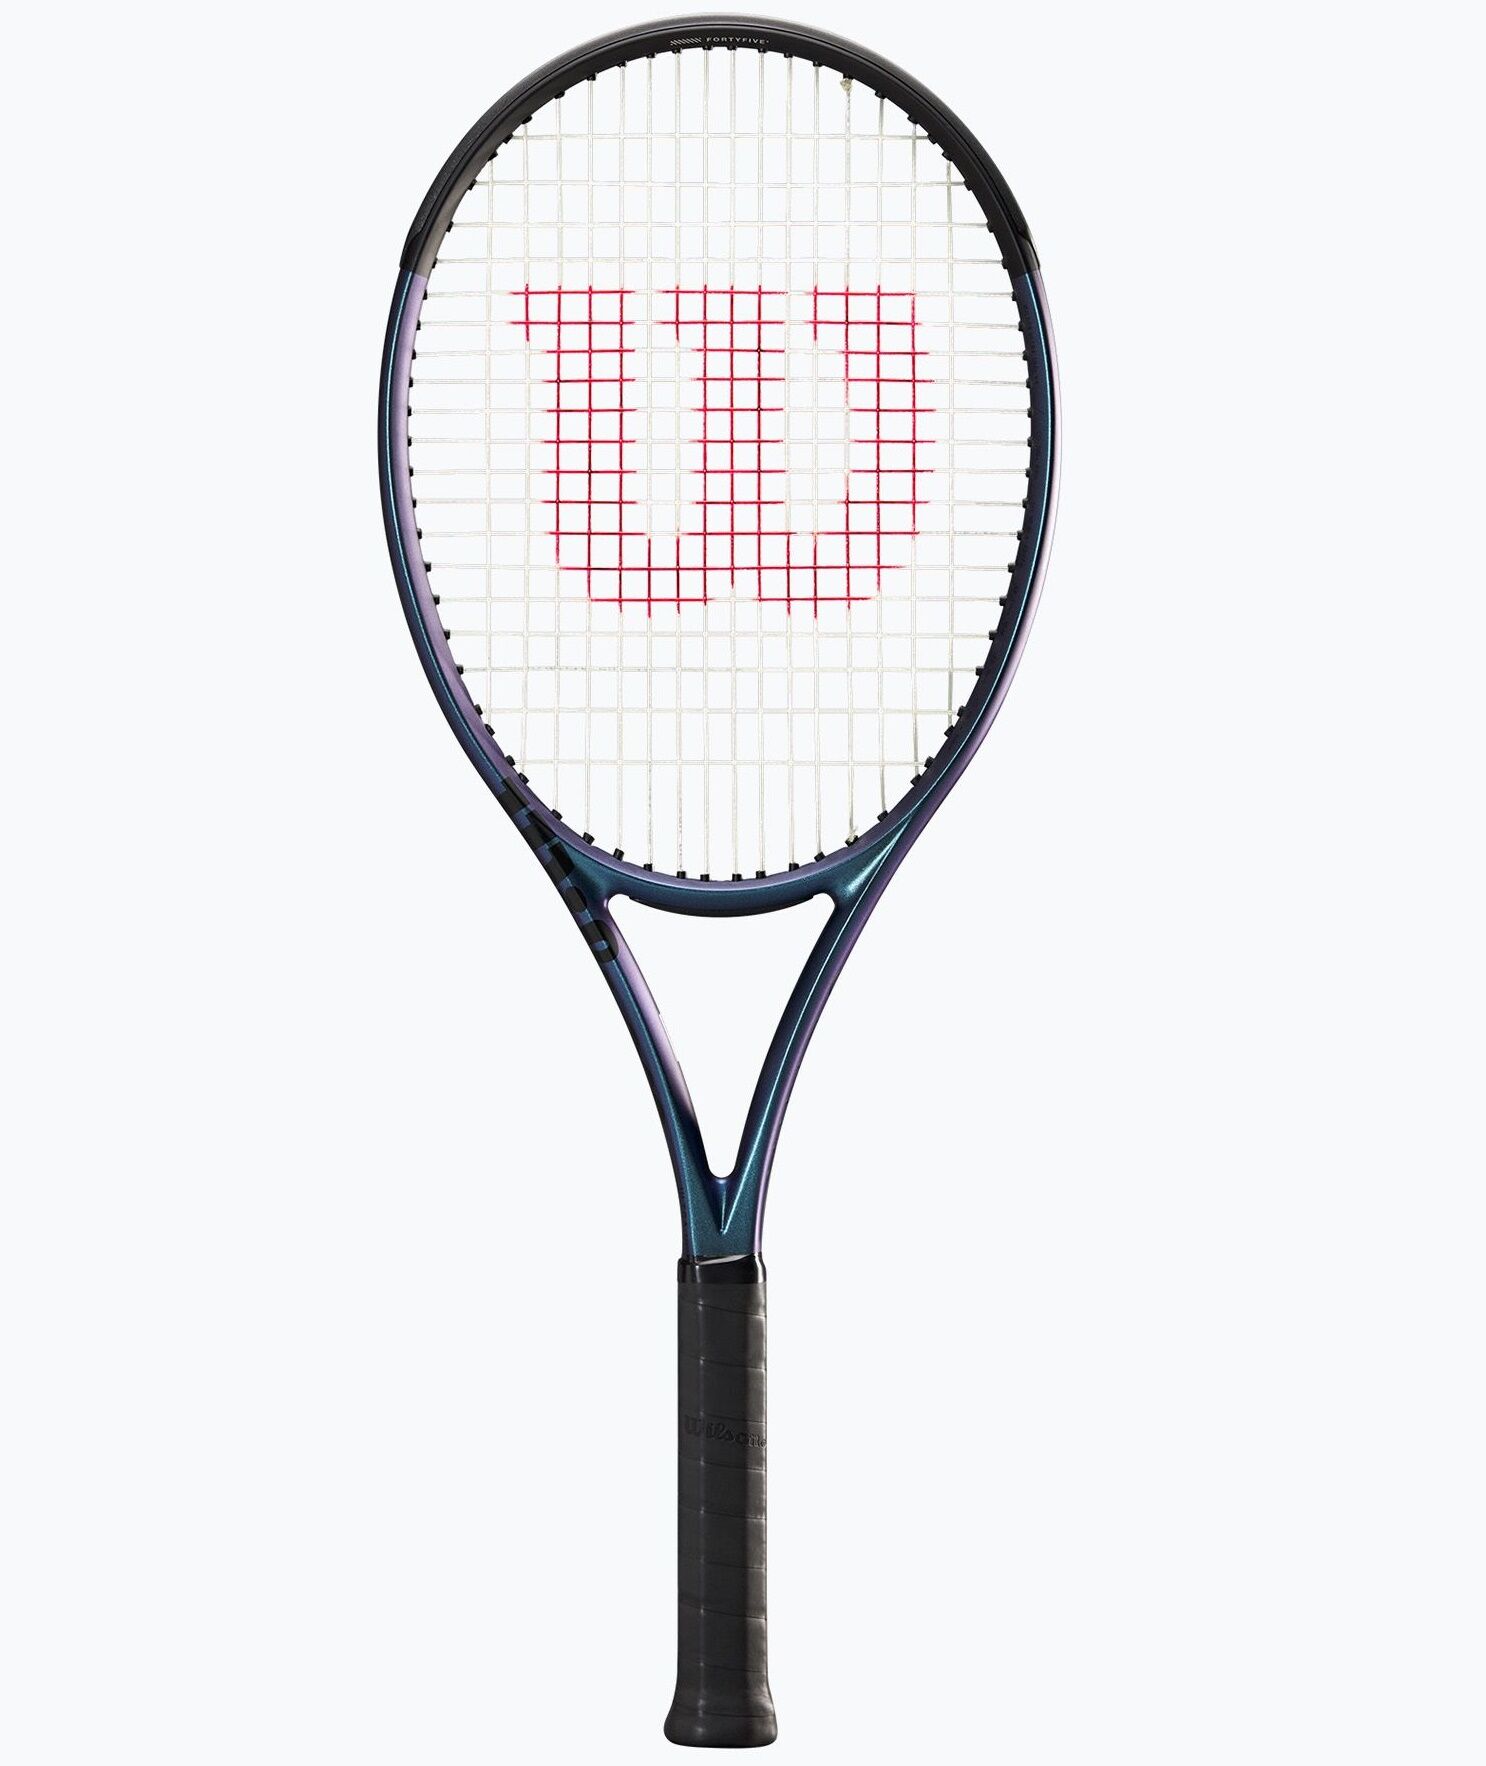 Wilson Ultra 100UL V4.0 Tenis Raketi 260 Gr. WR108510U1